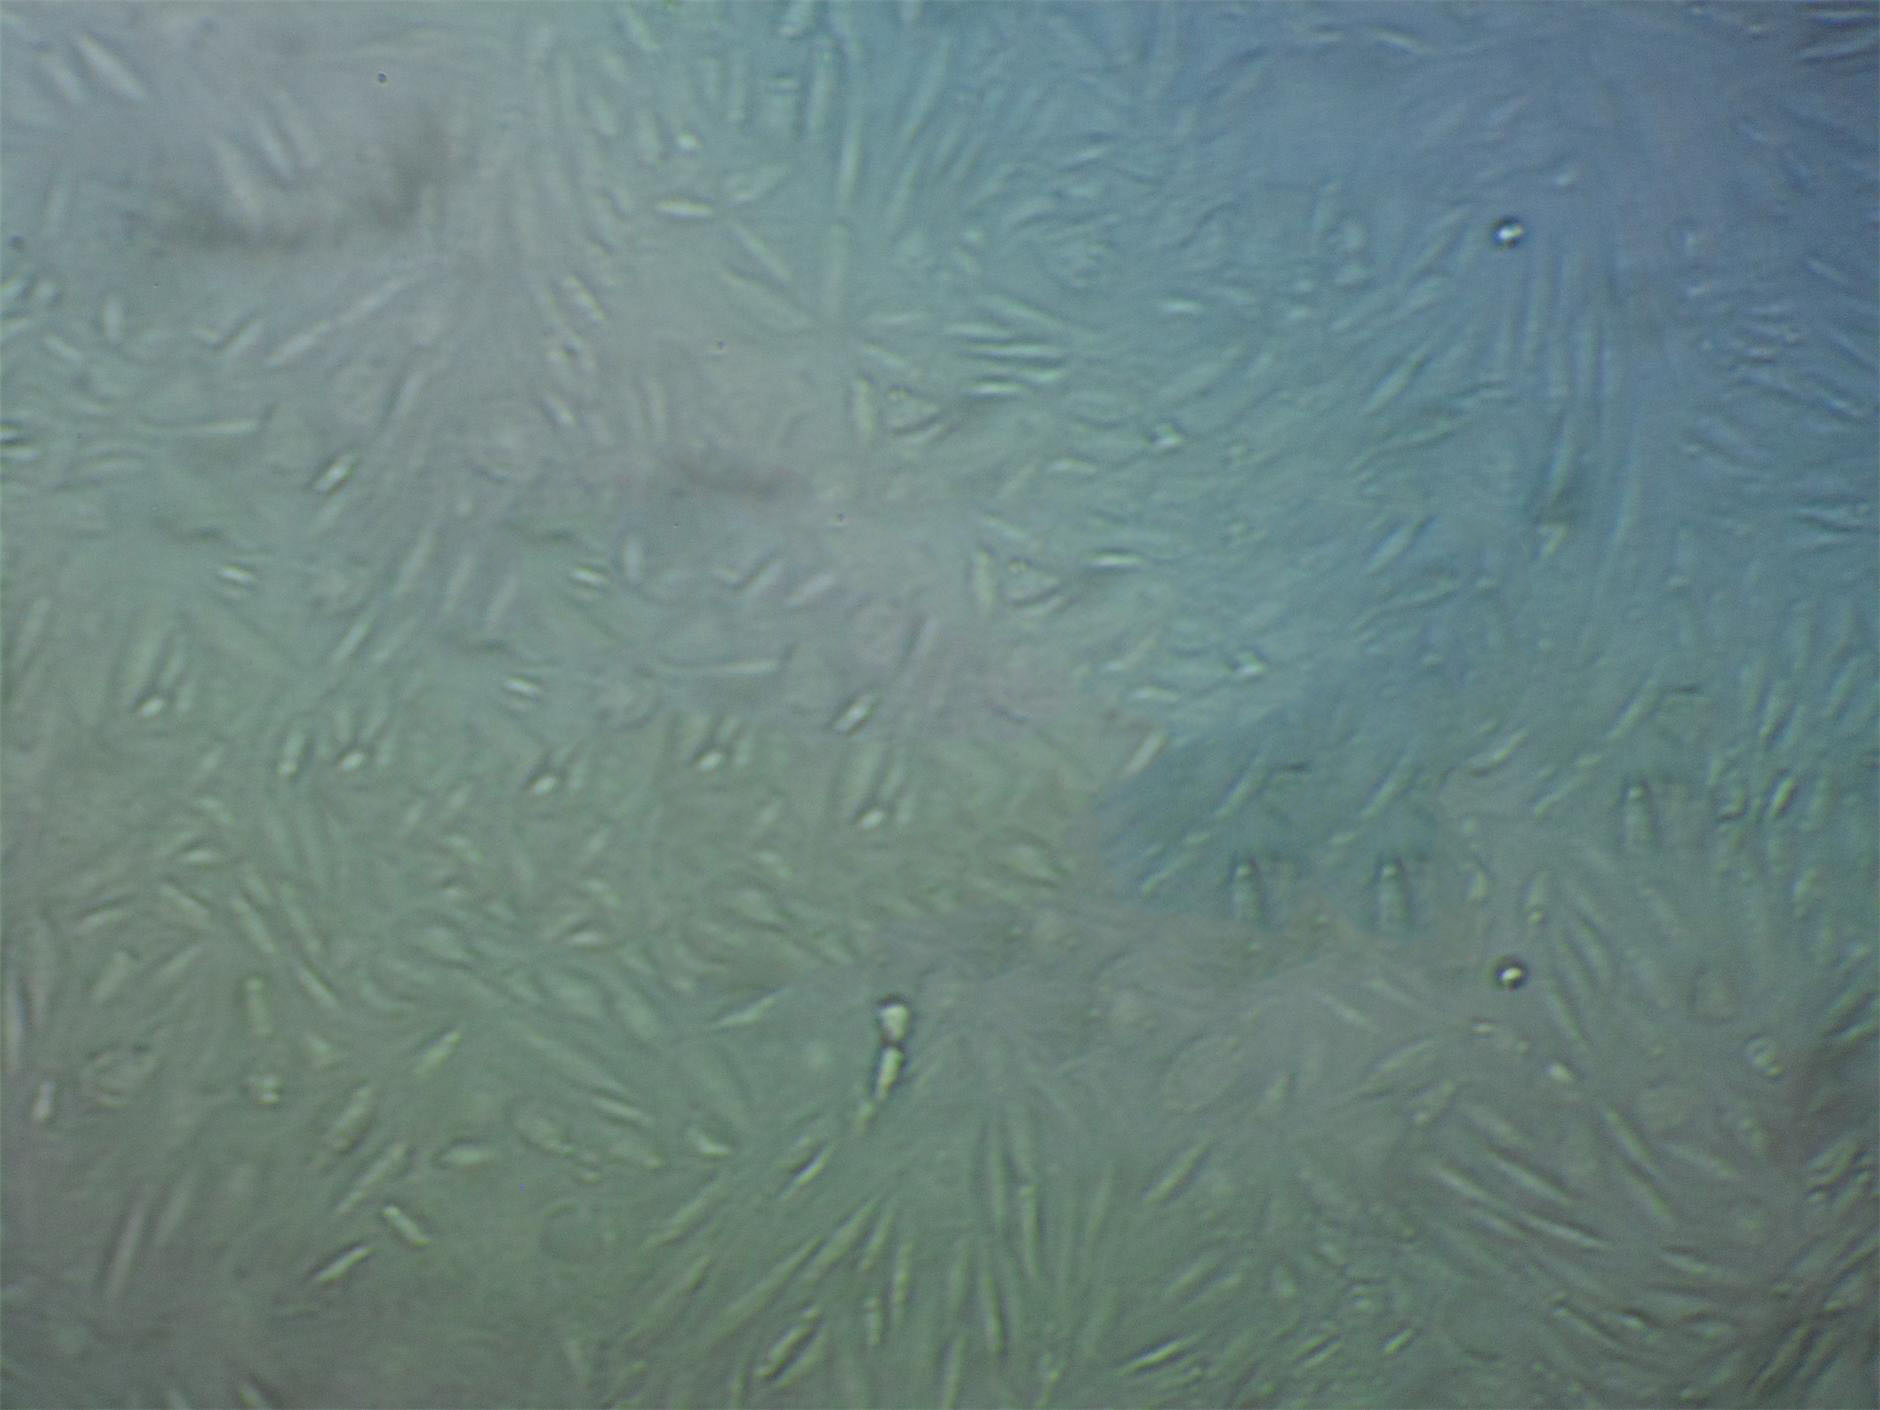 SL-29 cell line鸡胚成纤维细胞系,SL-29 cell line